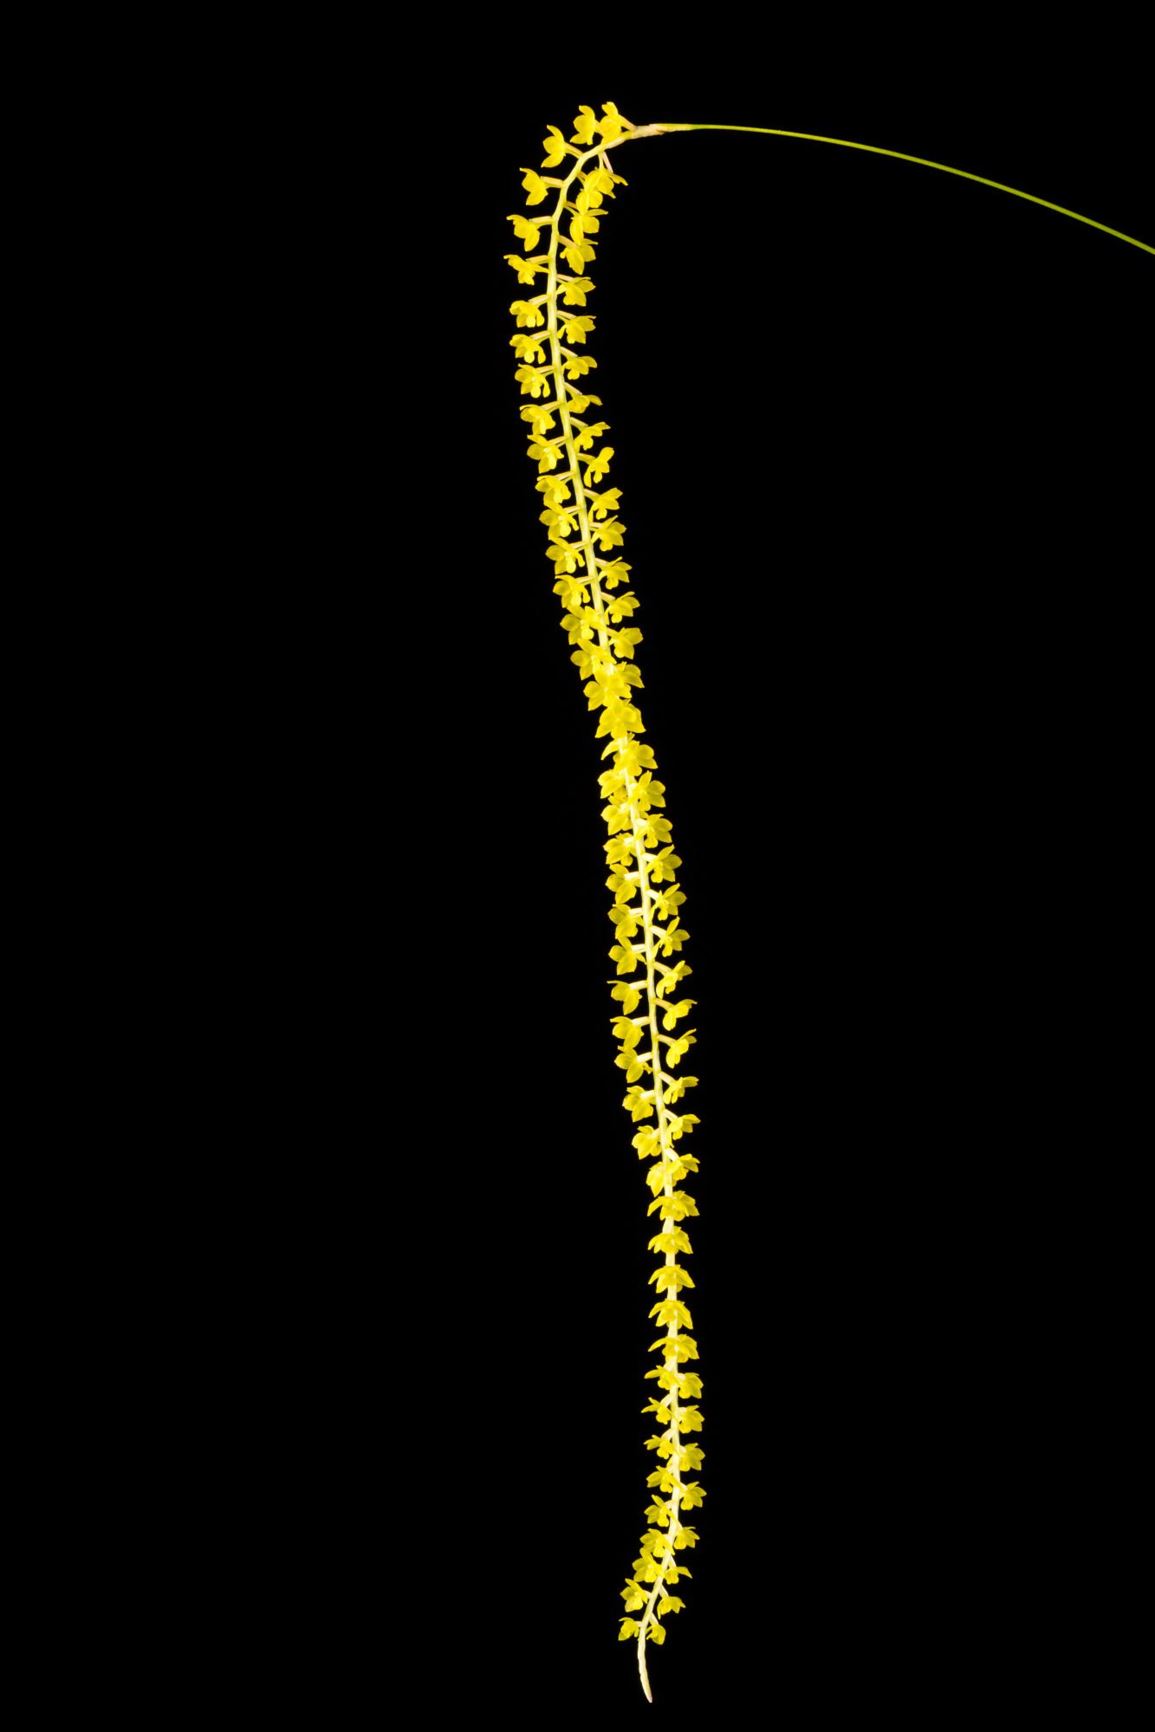 Coelogyne filiformis - Golden Chain Orchid, Thread-Like Coelogyne, Thread-Like Dendrochilum